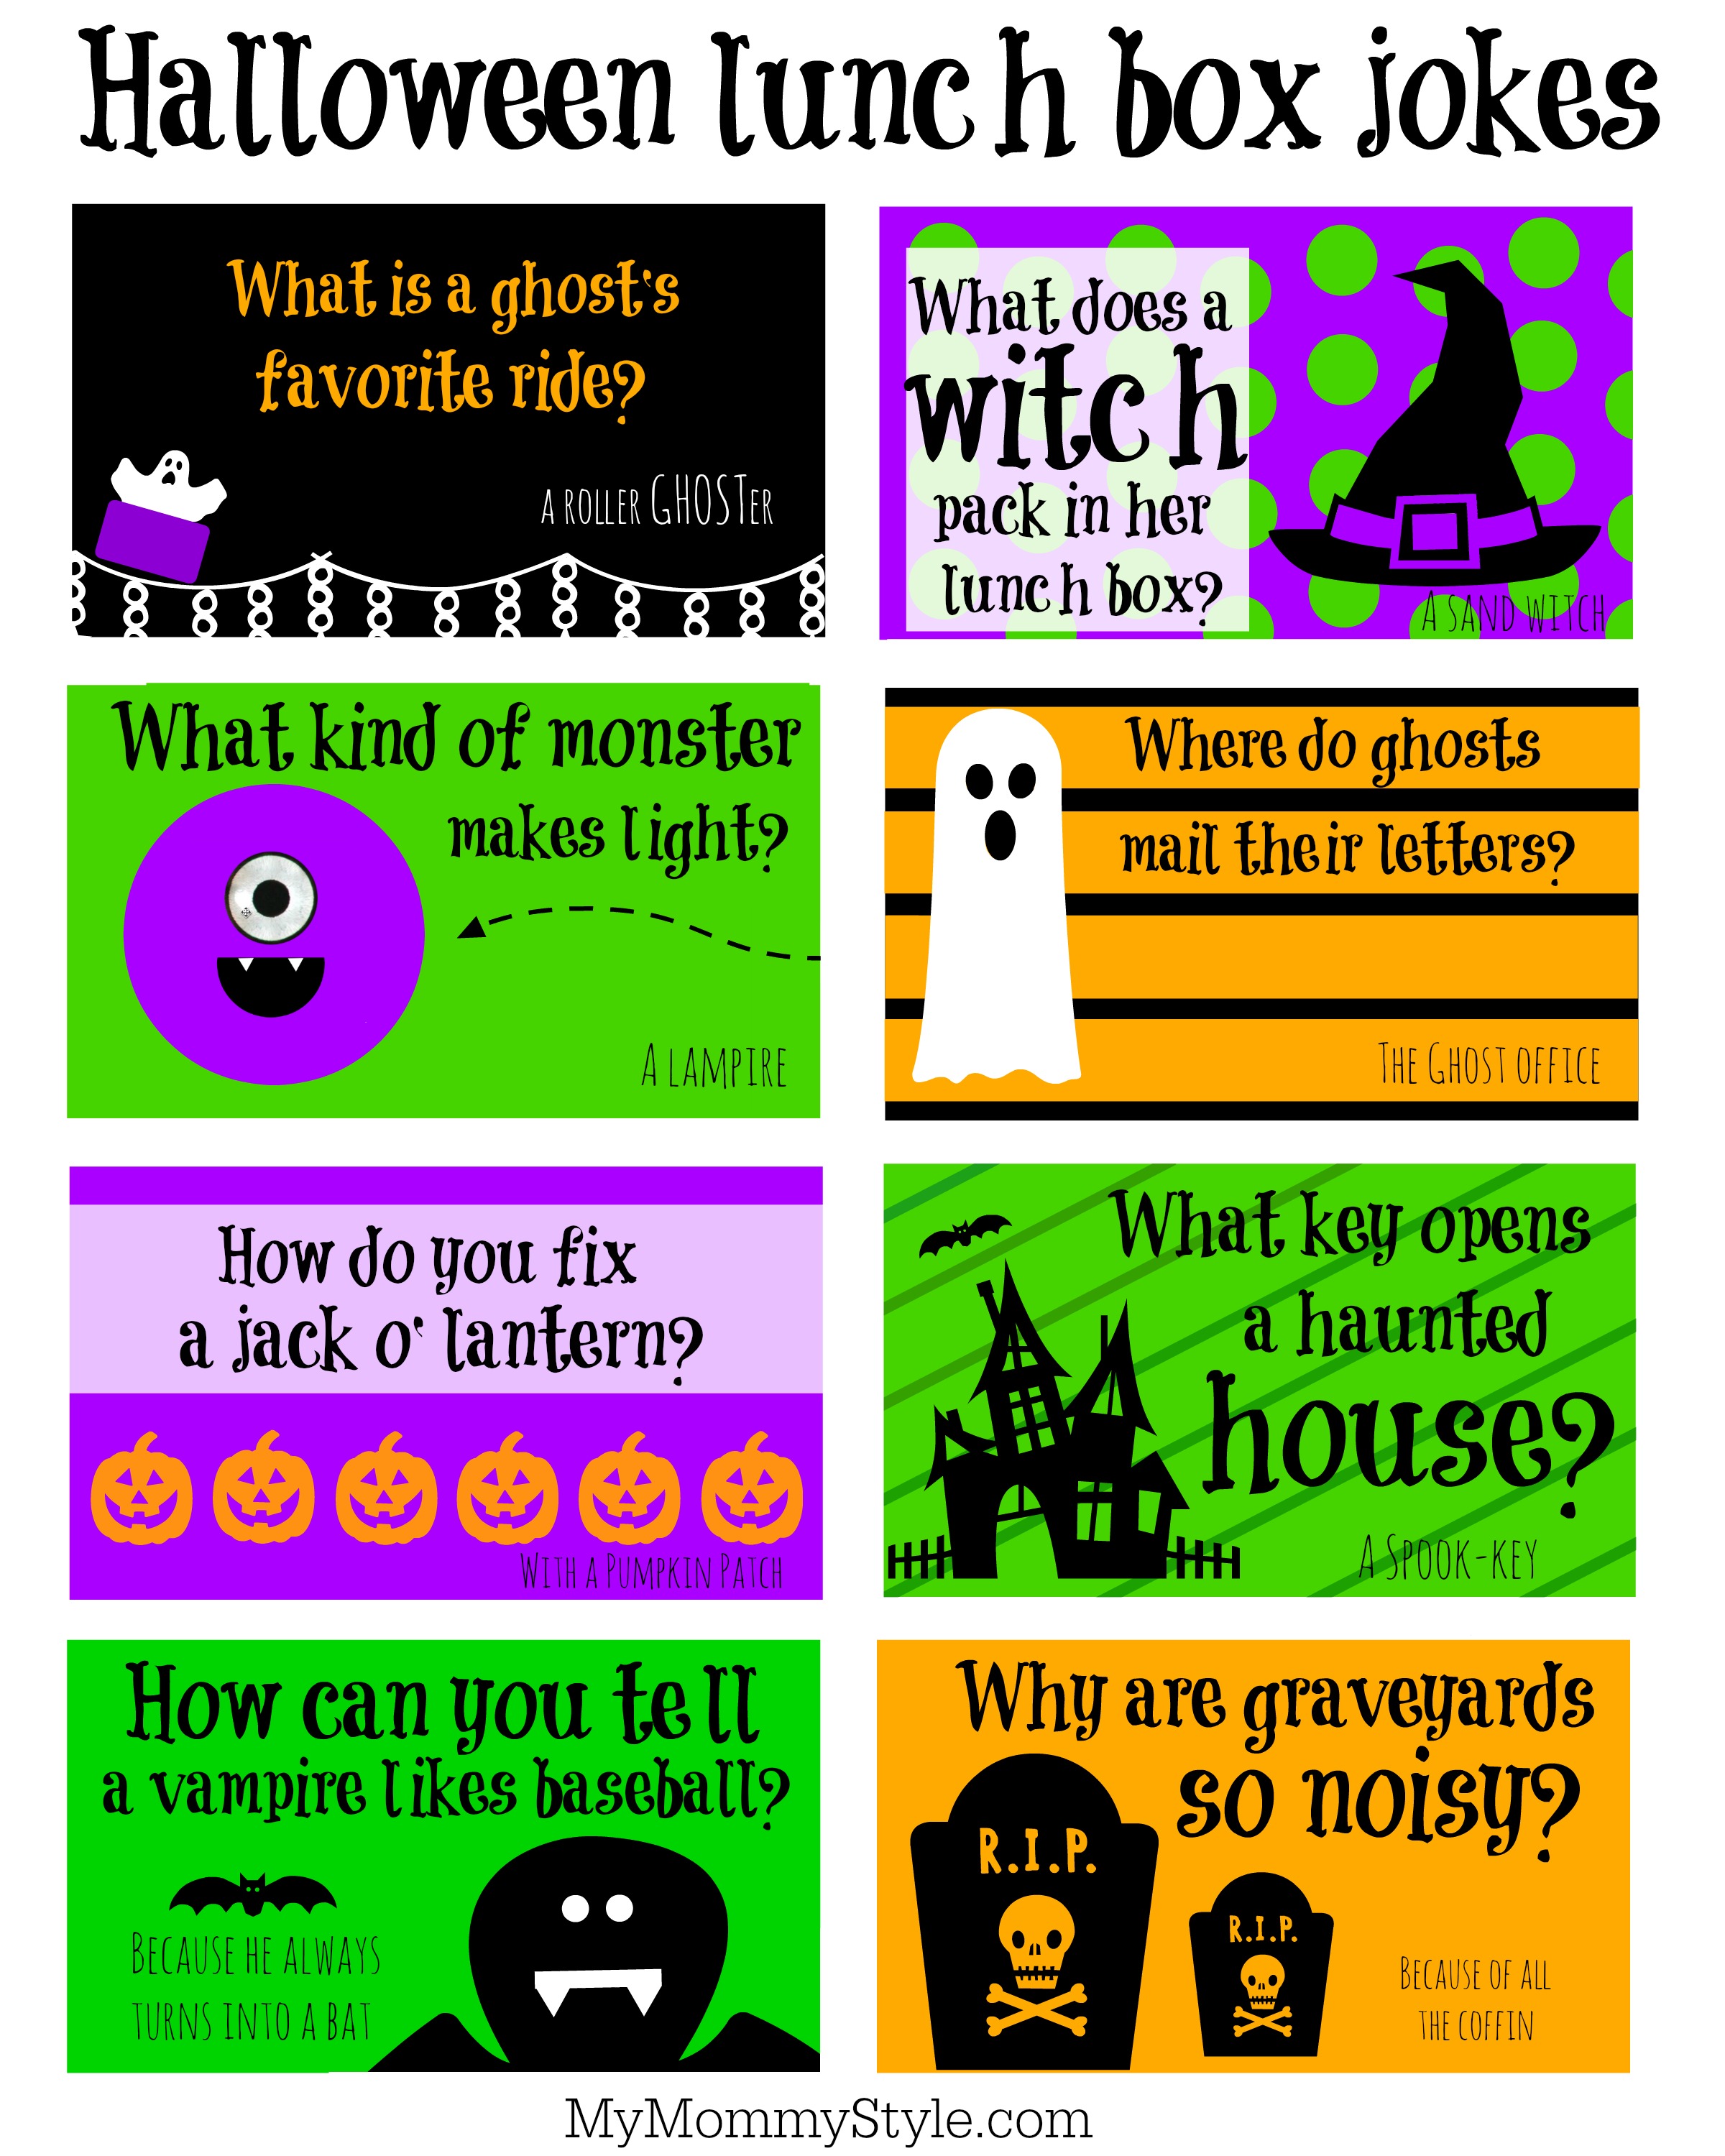 Halloween Lunch Box Jokes Free Printables For Kids Ma - vrogue.co